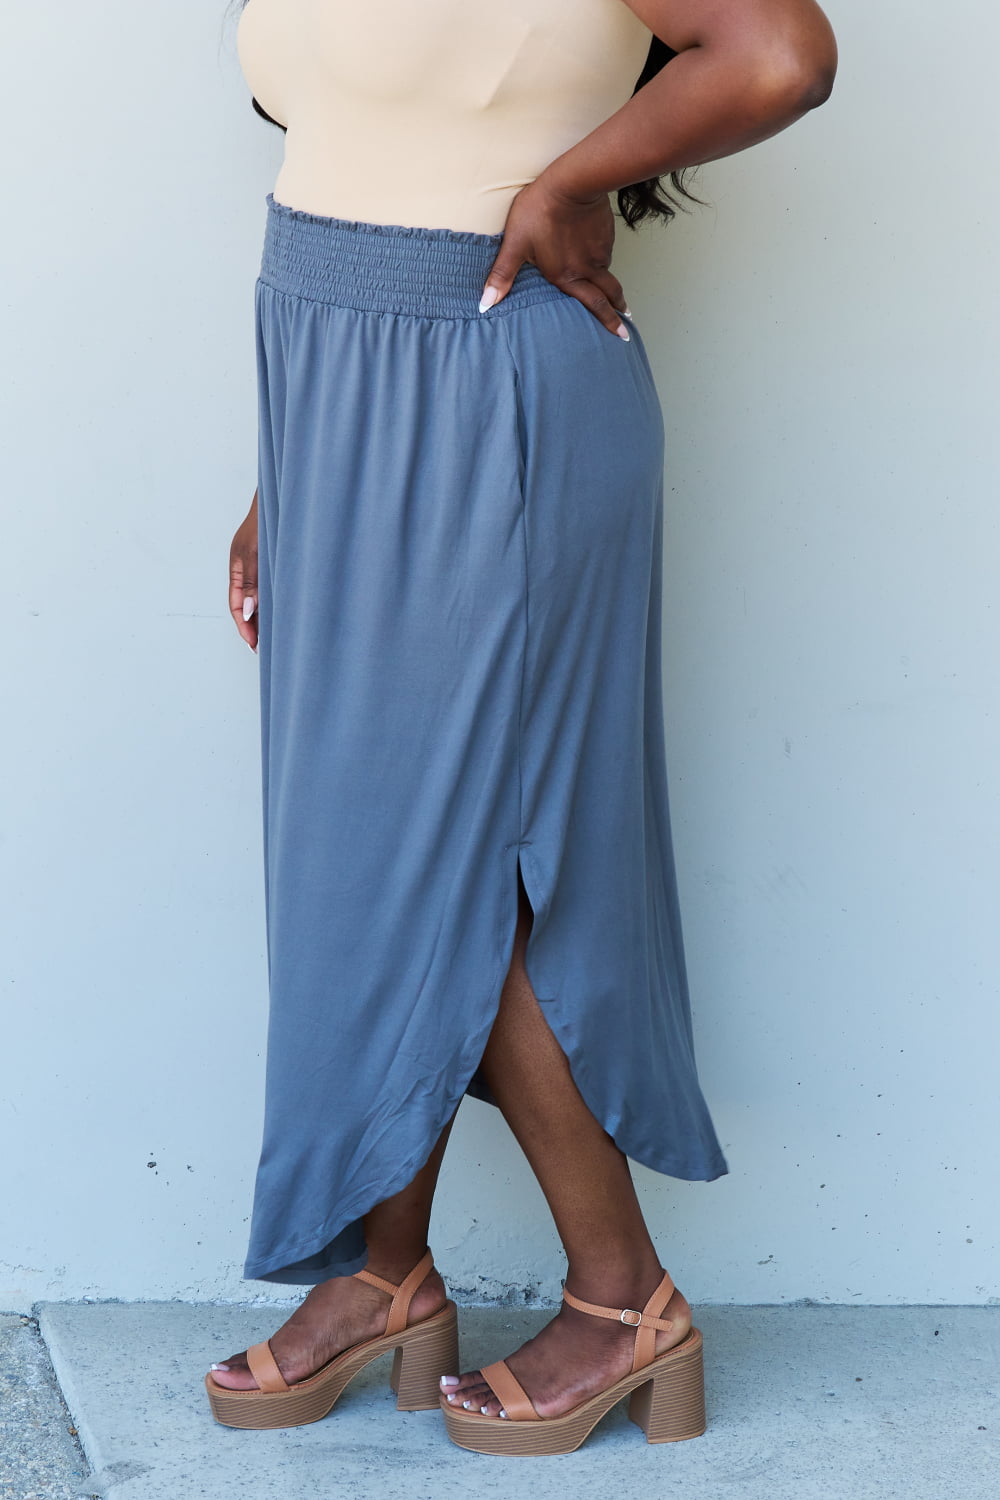 Falda larga Doublju Comfort Princess de tamaño completo, cintura alta, dobladillo redondo, en azul polvoriento